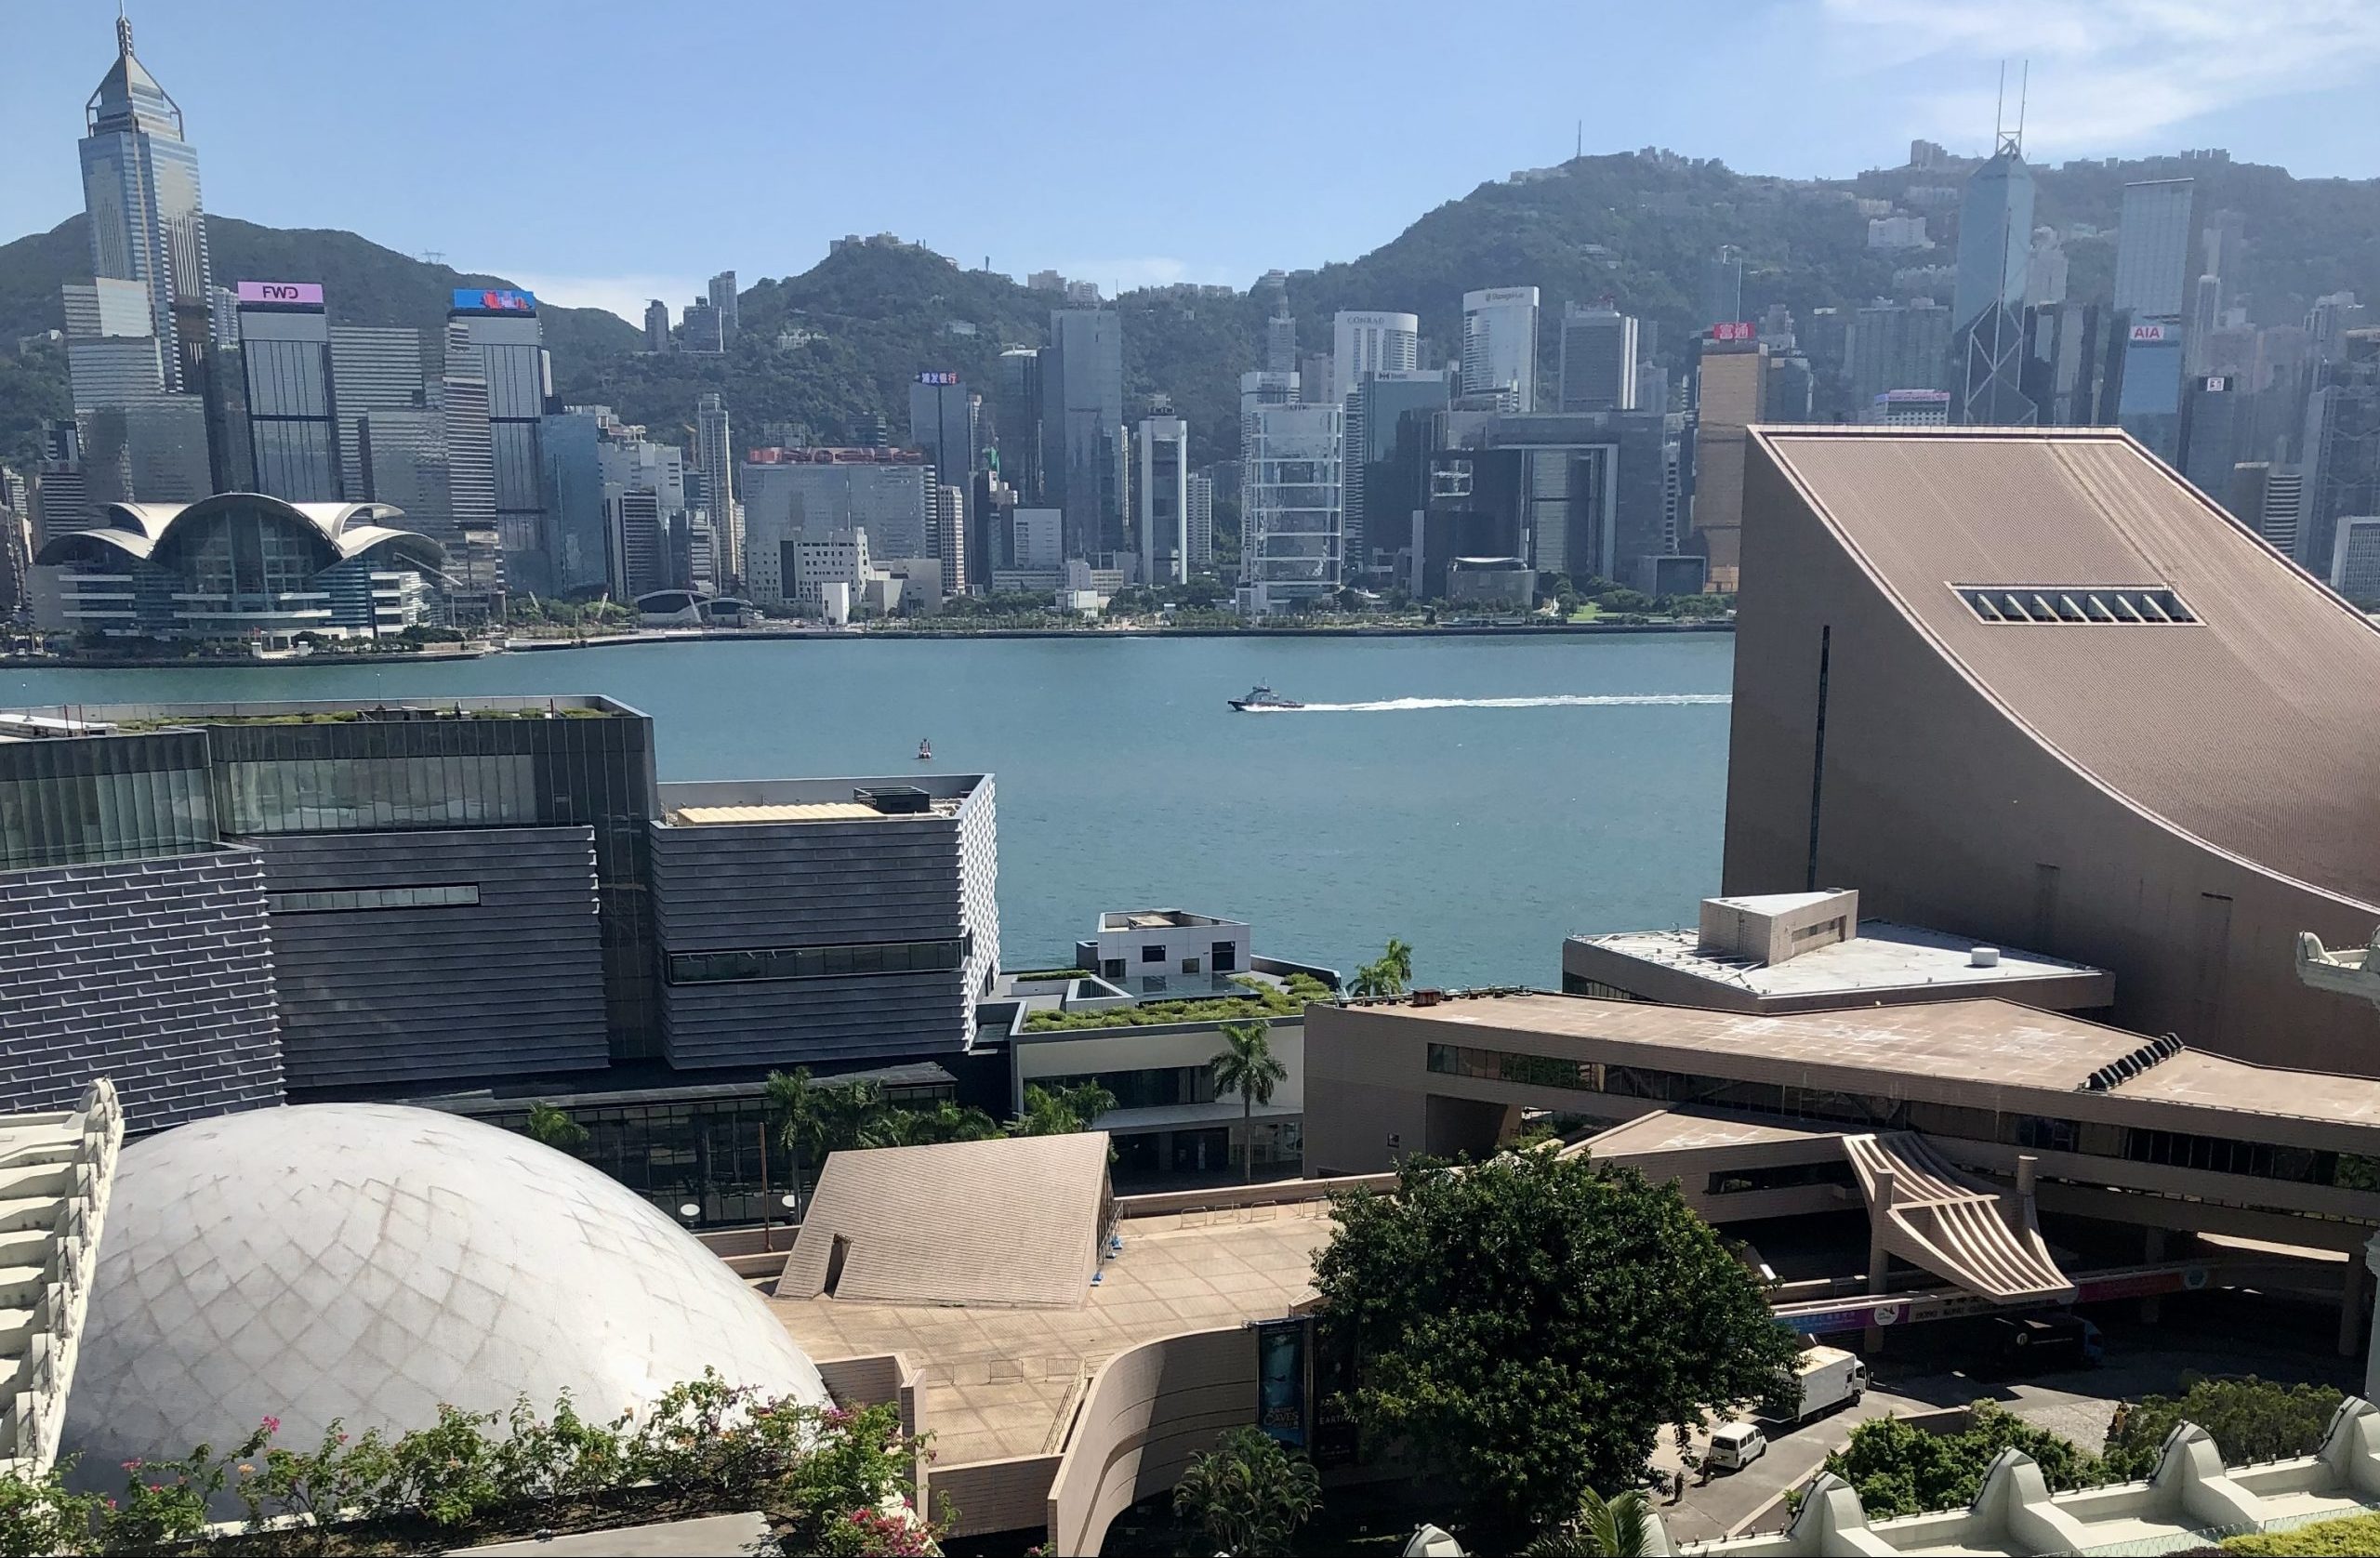 The Hong Kong Greeters Guide To The Tsim Sha Tsui Waterfront